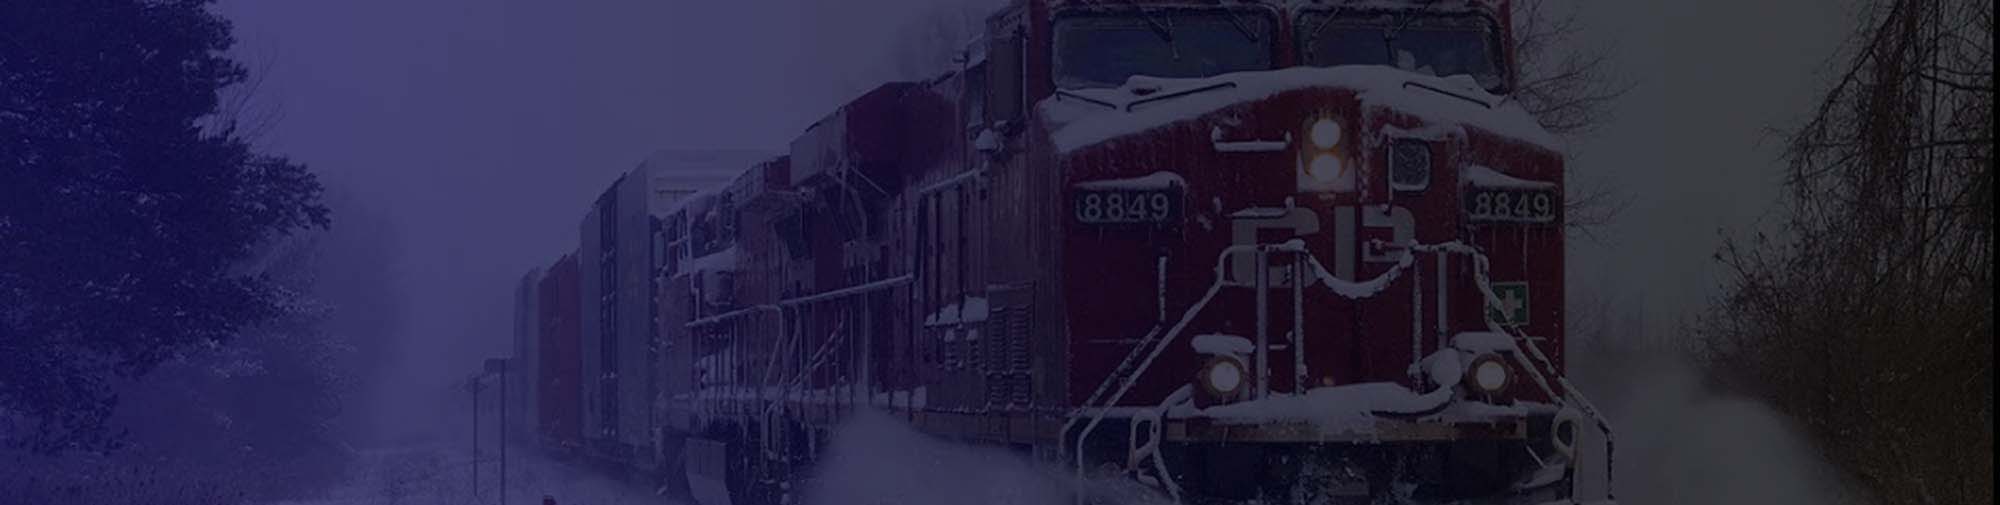 Locomotive in Snow